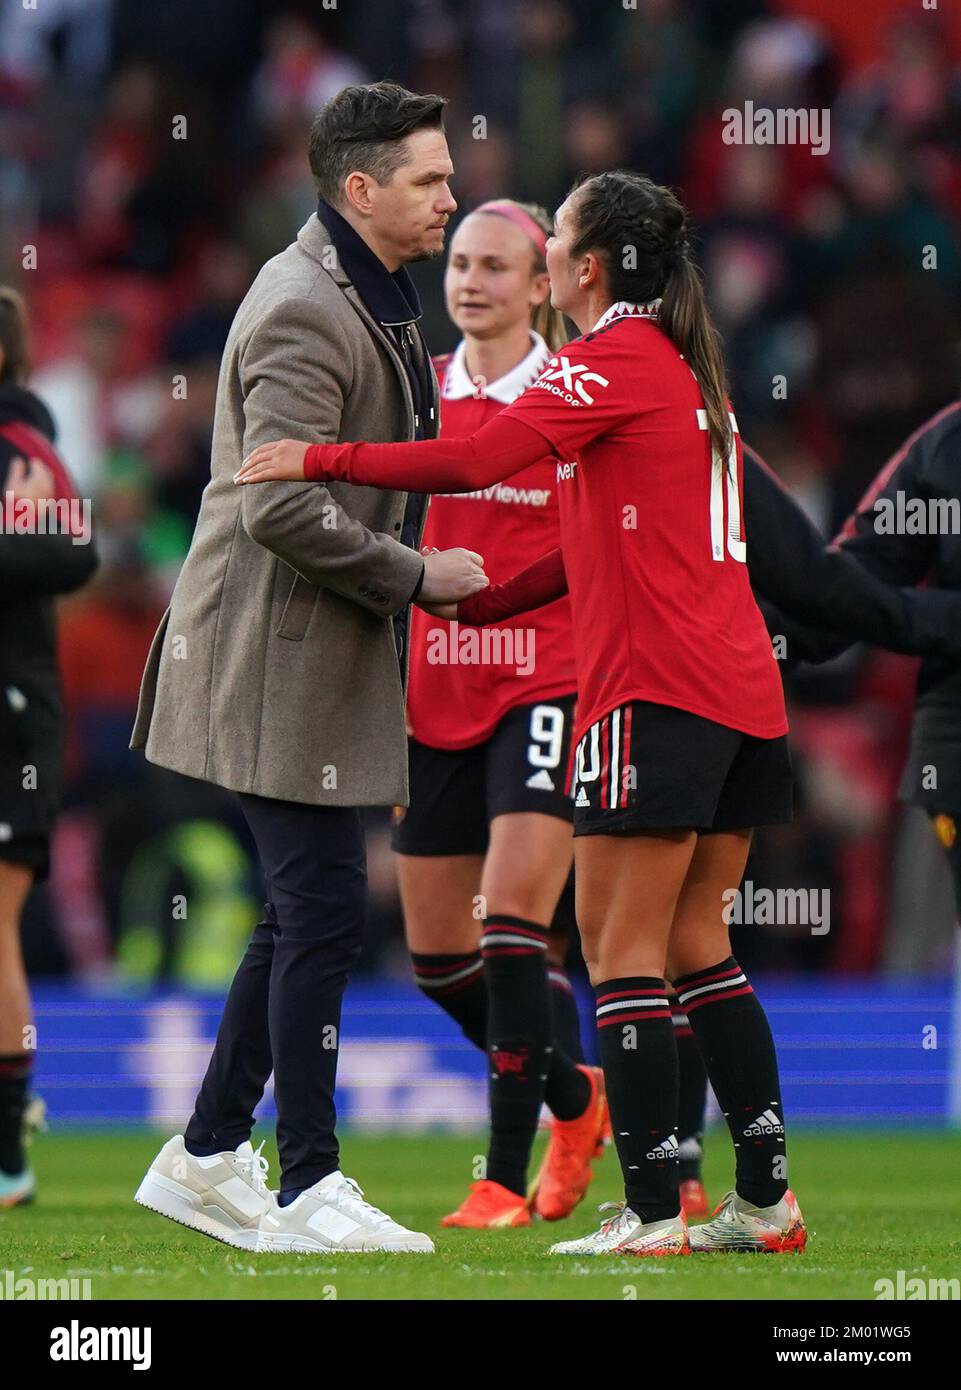 El manager del Manchester United Marc Skinner se da la mano a Katie Zelem después del partido de la Superliga Femenina Barclays en Old Trafford, Manchester. Fecha de la foto: Sábado 3 de diciembre de 2022. Foto de stock